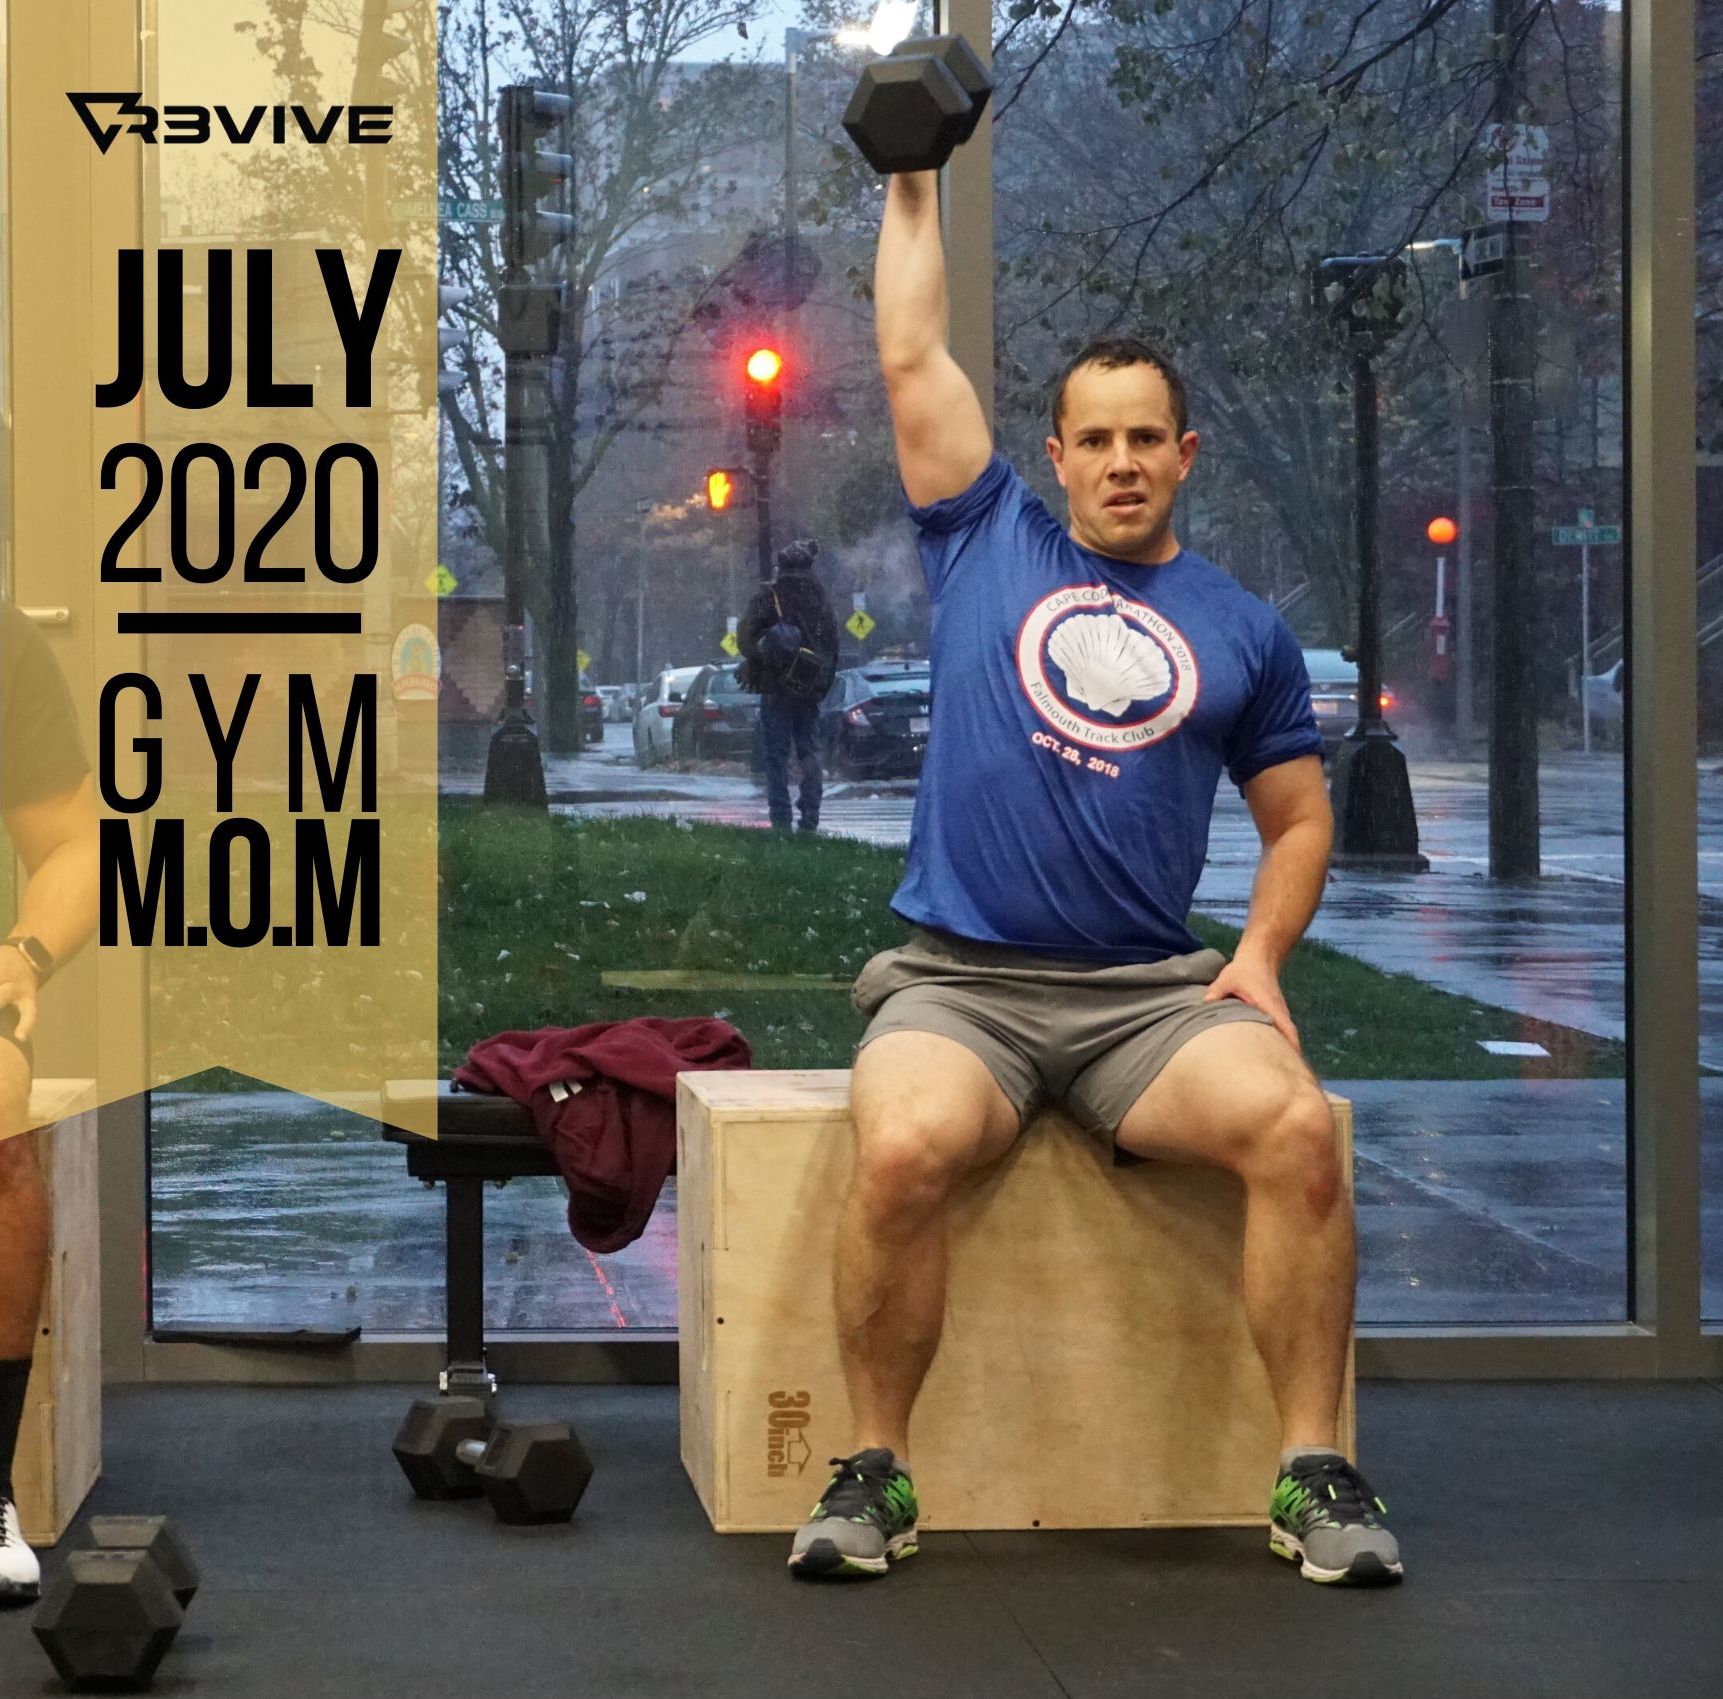 July 2020's gym mom, Nate